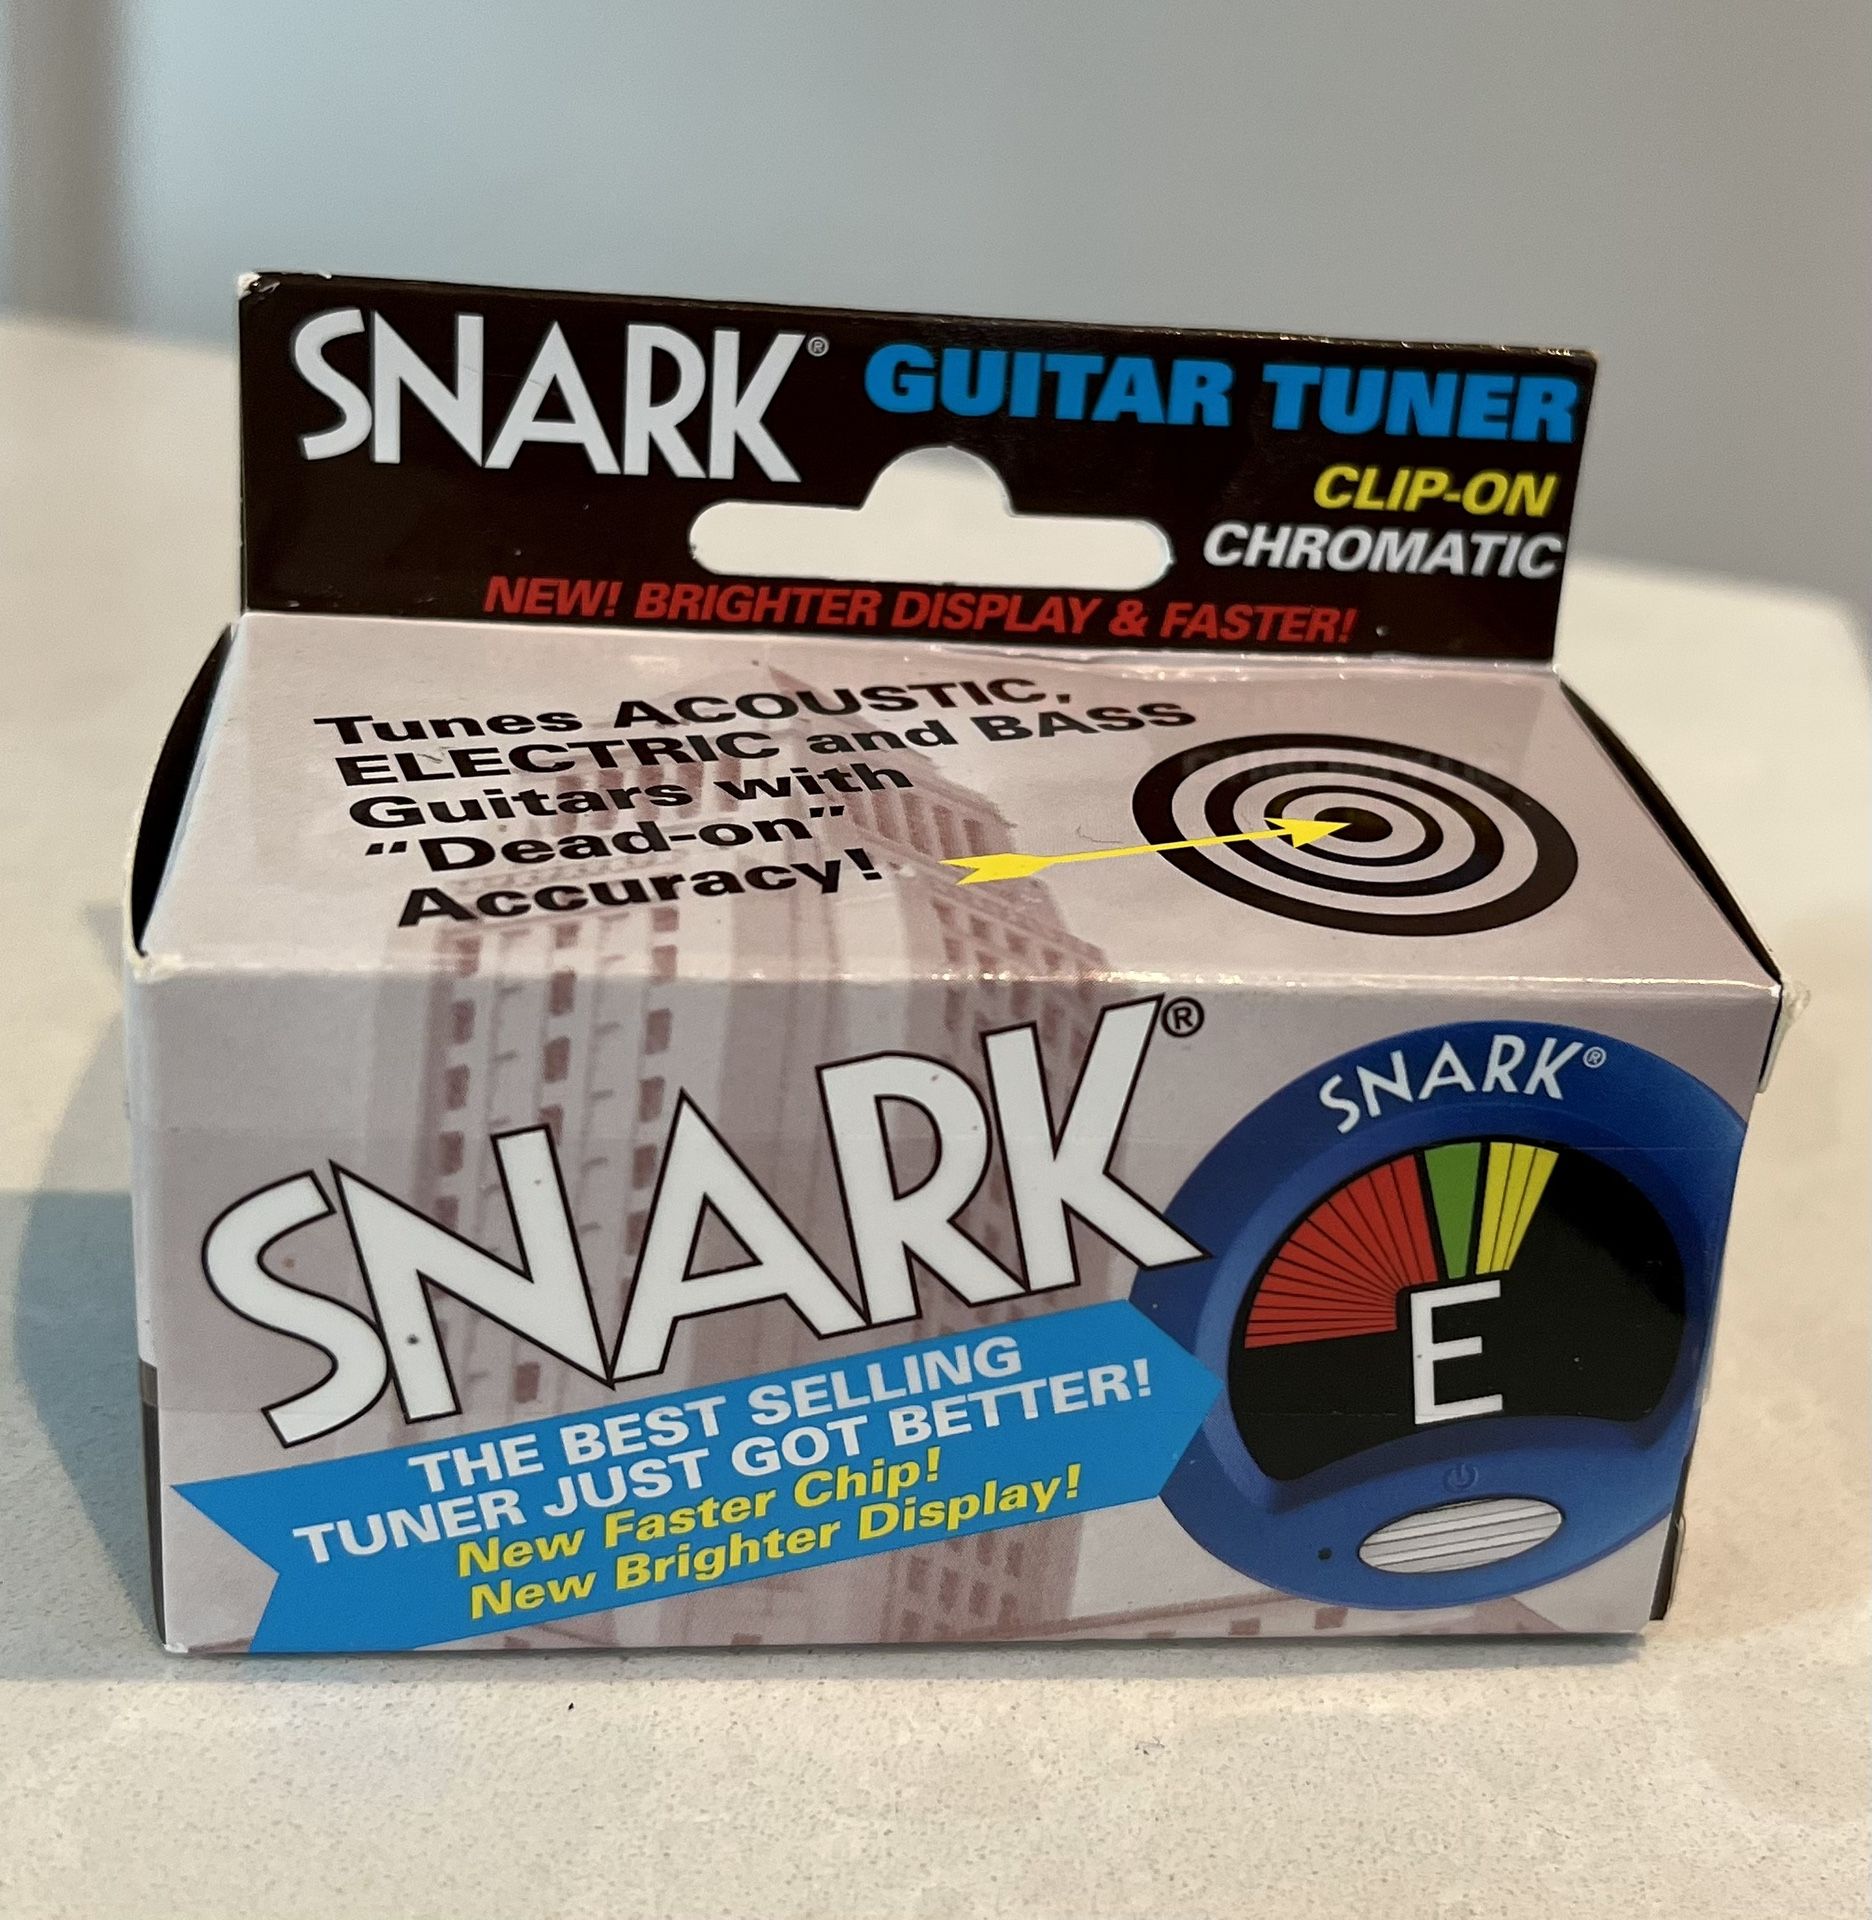 NEW: Snark Guitar Tuner